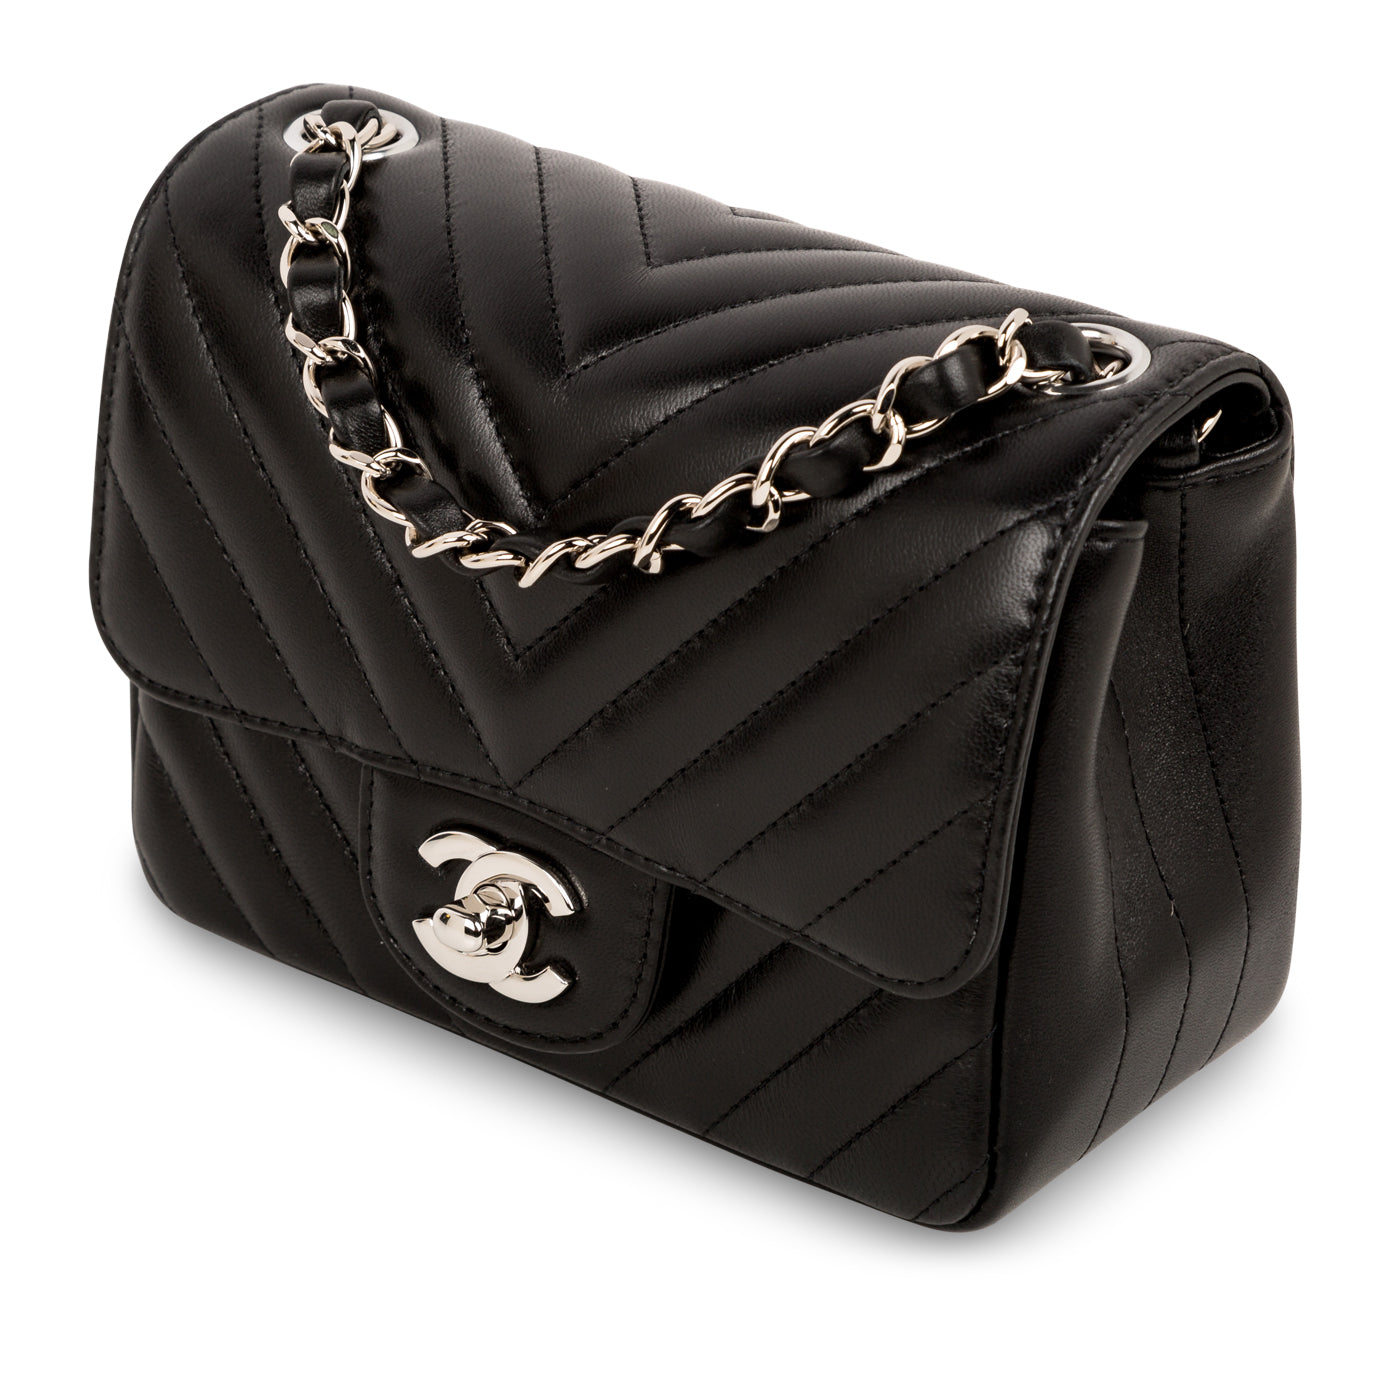 Chanel - Mini Square Classic Flap Bag - Black Chevron Lambskin - SHW - New